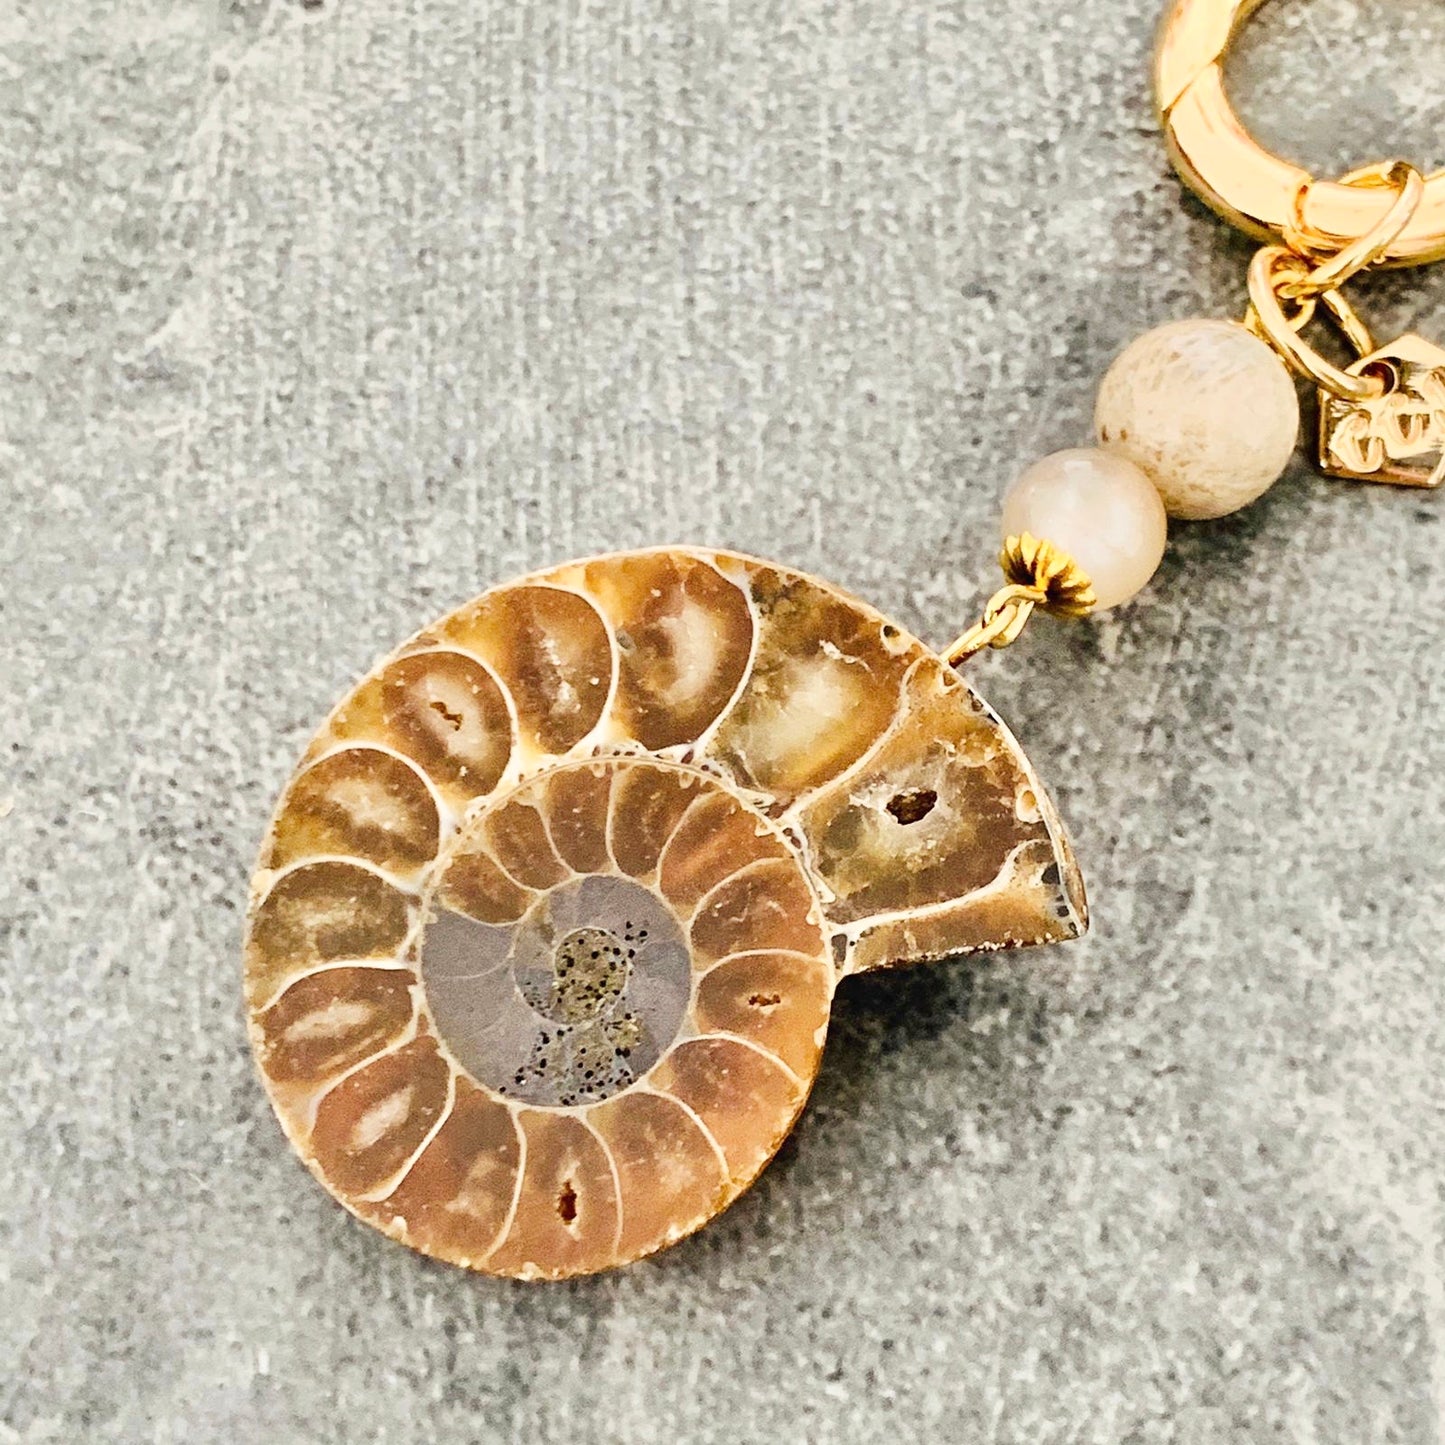 Happiness & Luck Ammonite Charm